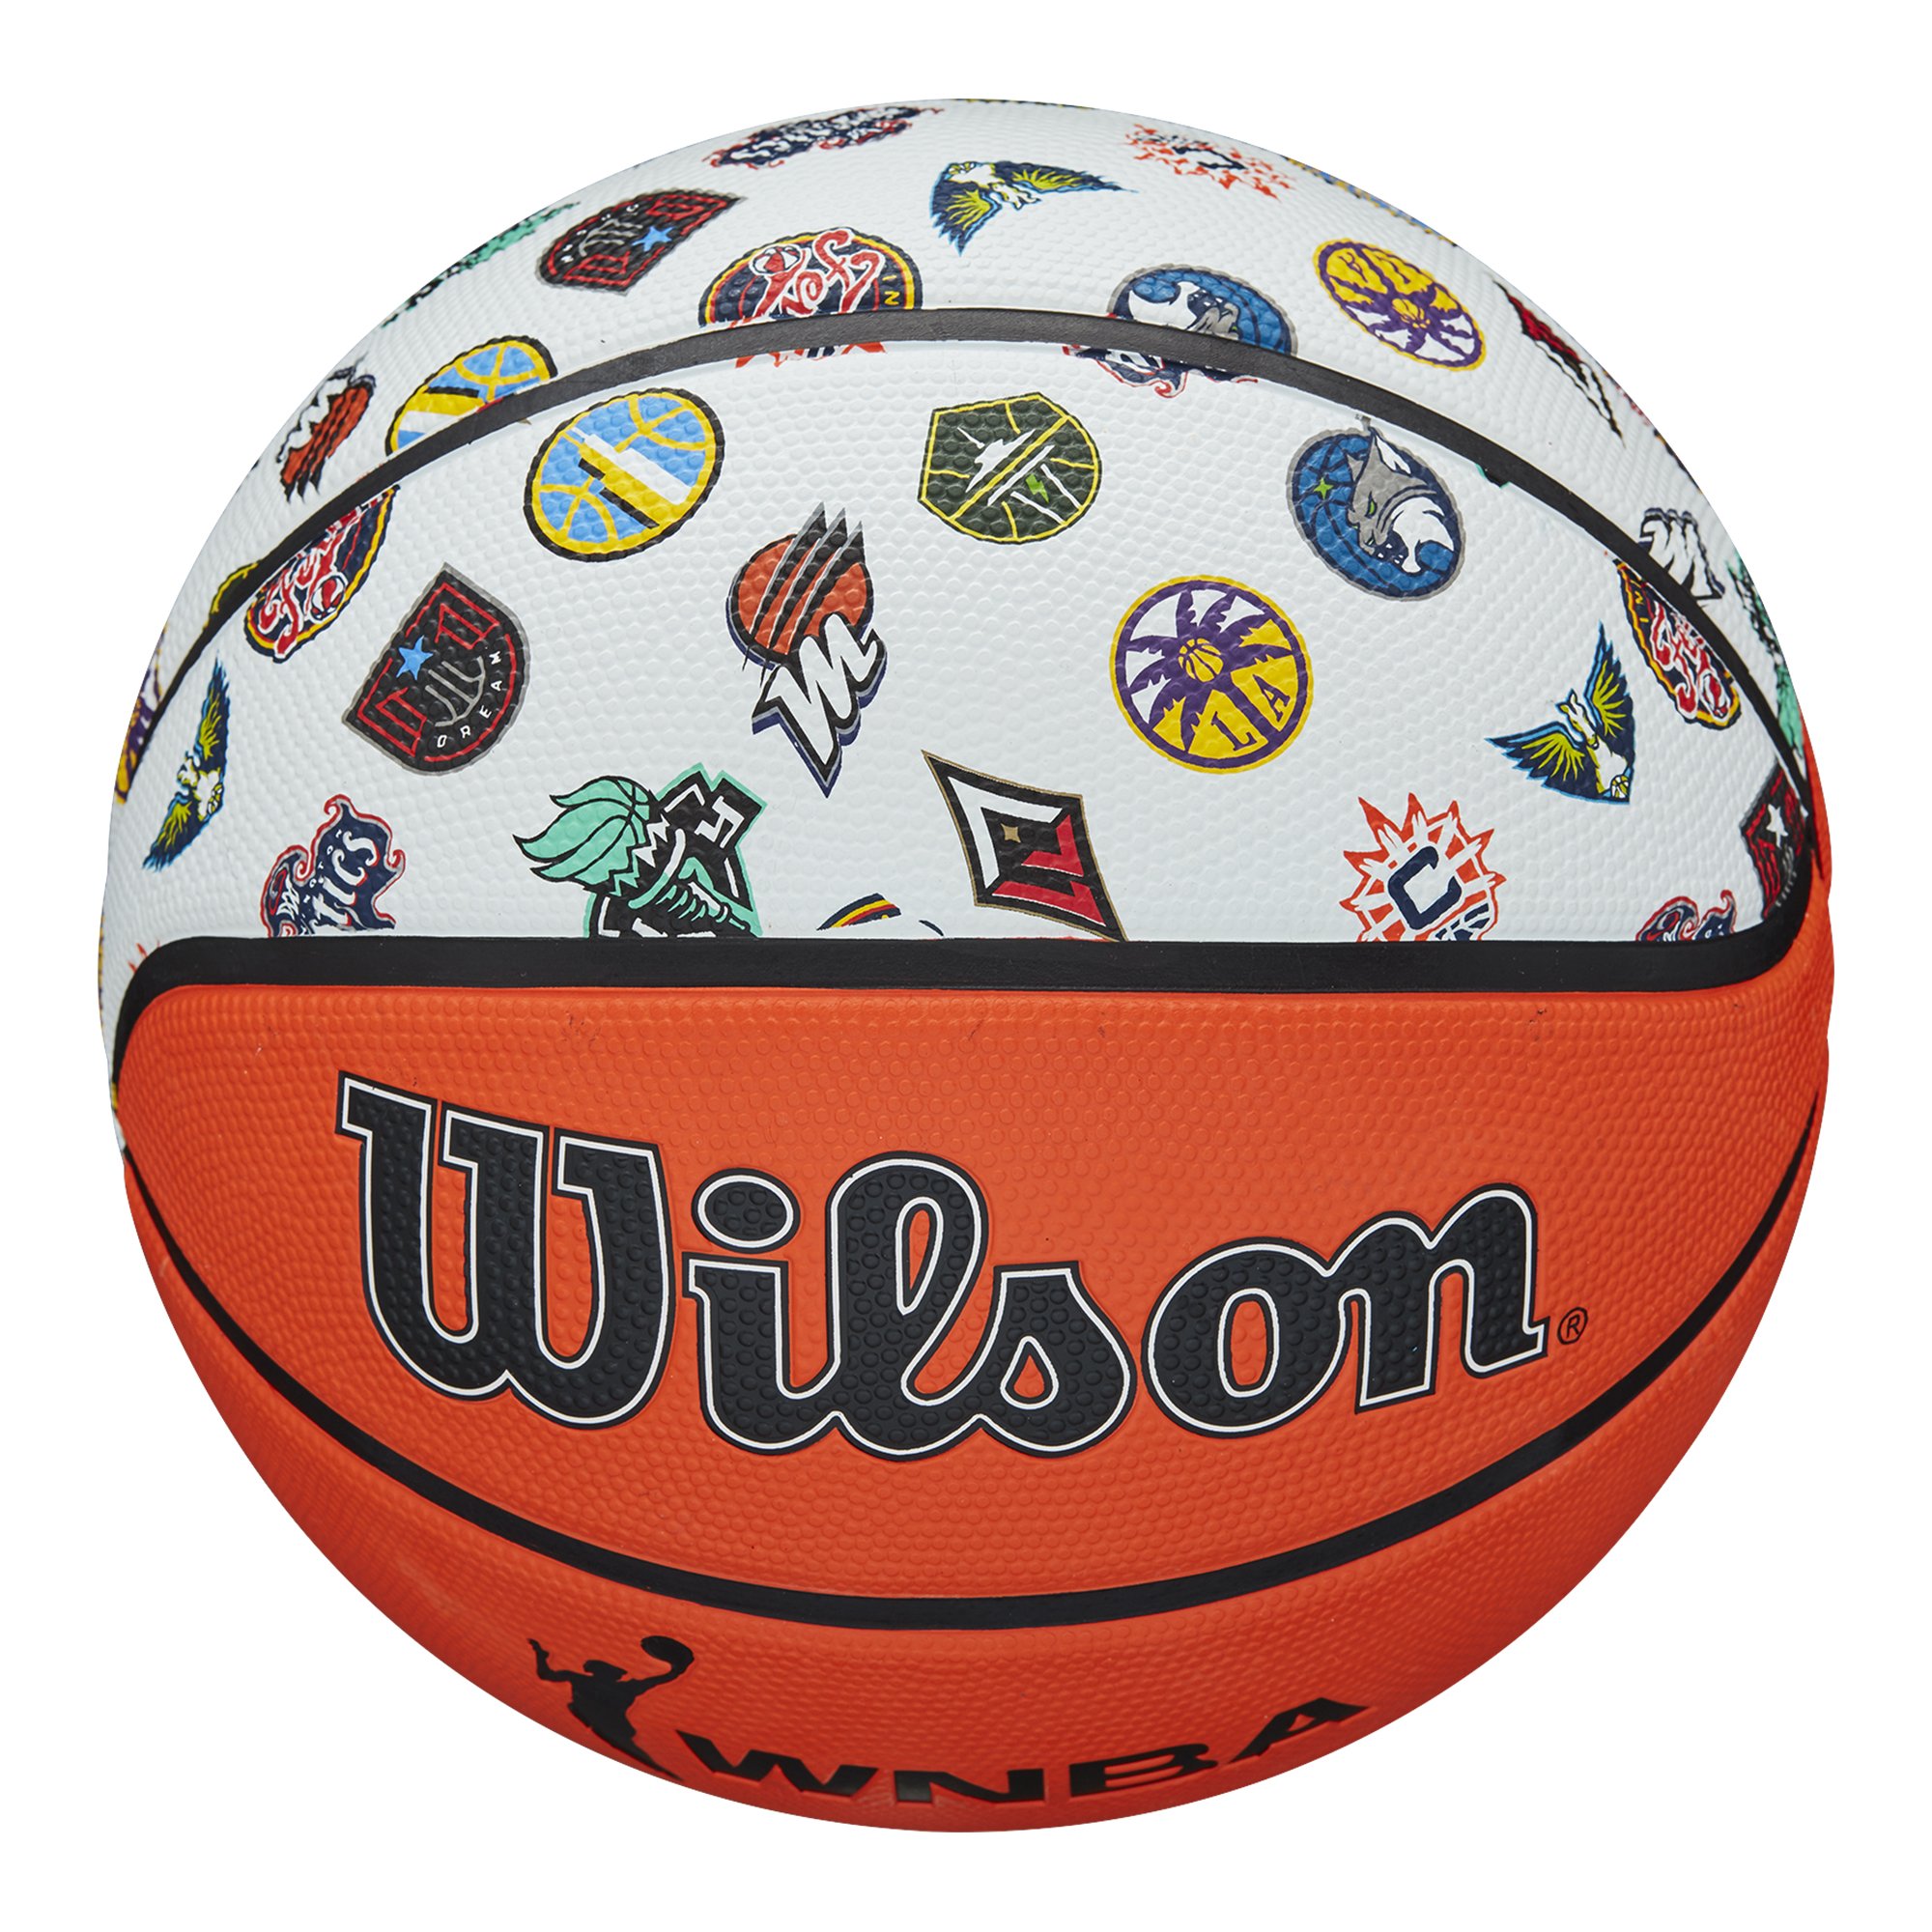 Wilson WNBA All Team Basketball